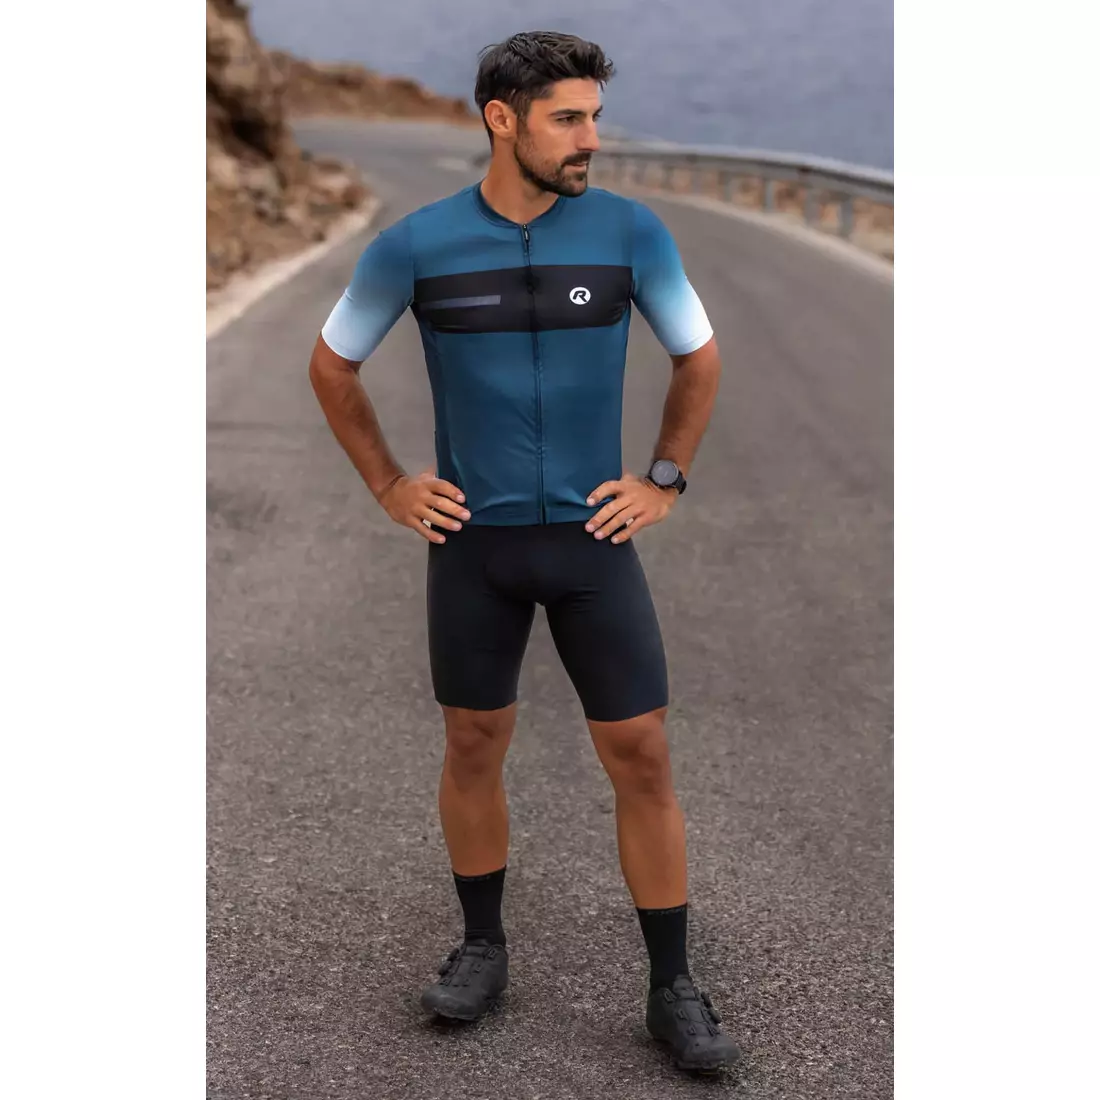 Rogelli DAWN pánsky cyklistický dres, modrá